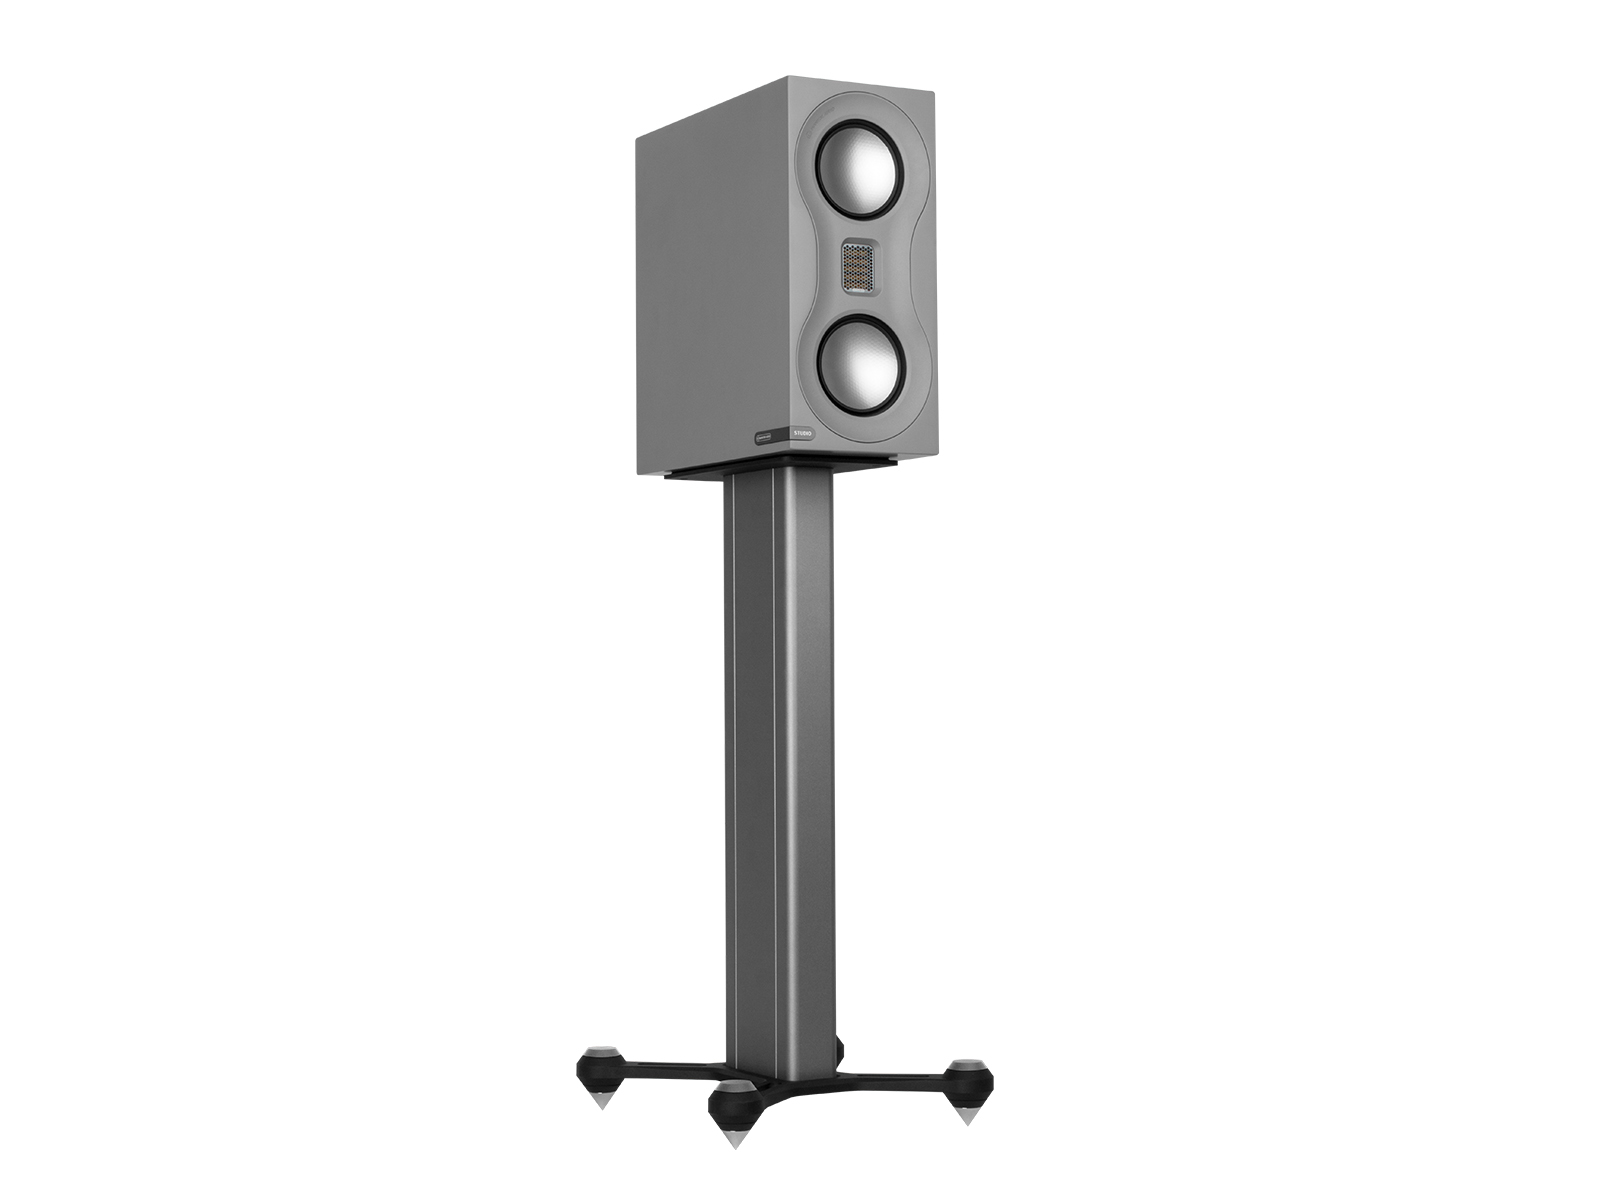 Speaker STAND, grey finish with a grey Studio speaker.